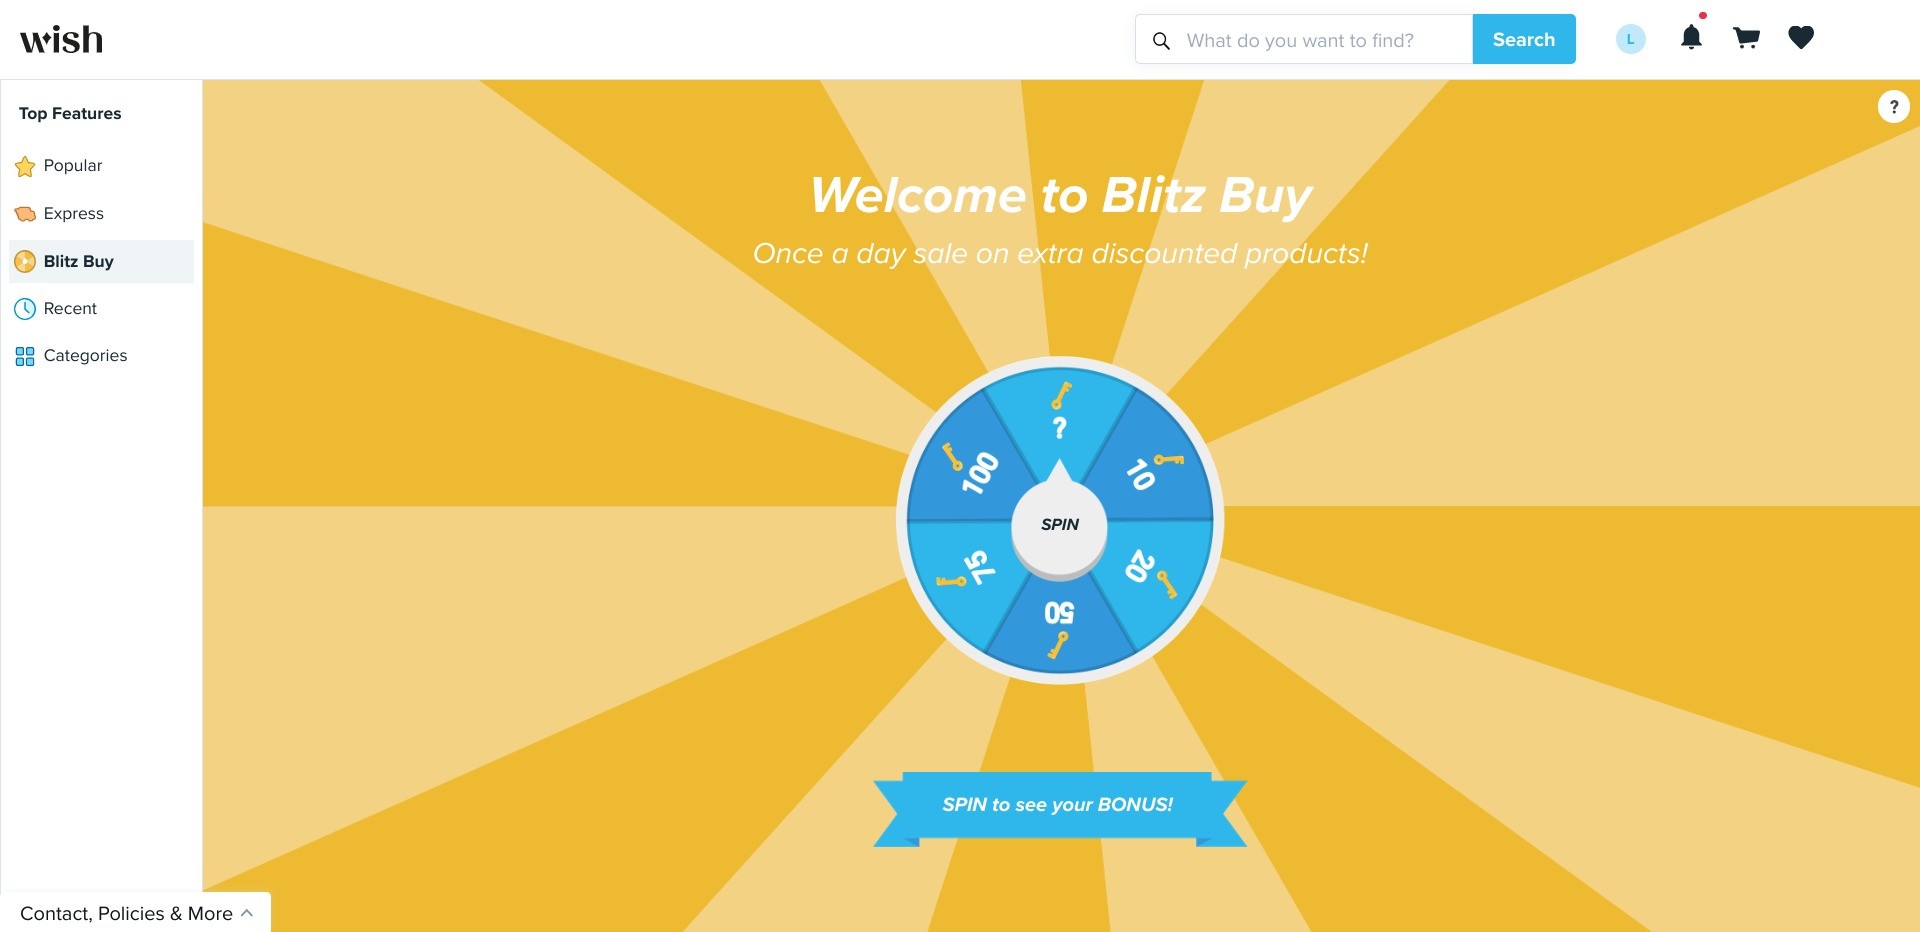 Screenshot of the Blitz Buy wheel on Wish.com